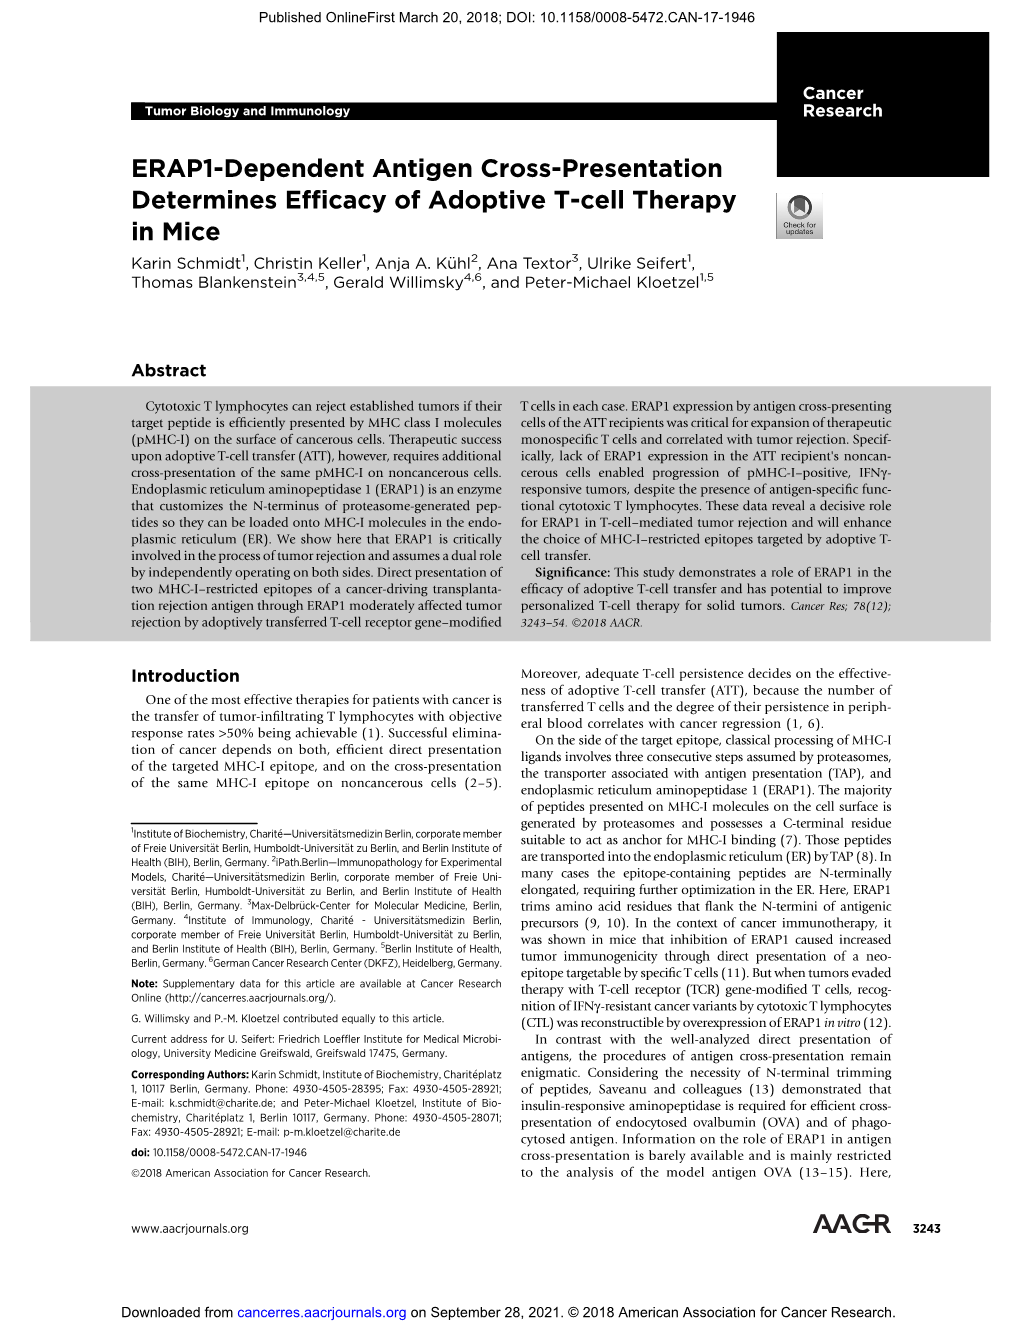 ERAP1-Dependent Antigen Cross-Presentation Determines Efﬁcacy of Adoptive T-Cell Therapy in Mice Karin Schmidt1, Christin Keller1, Anja A